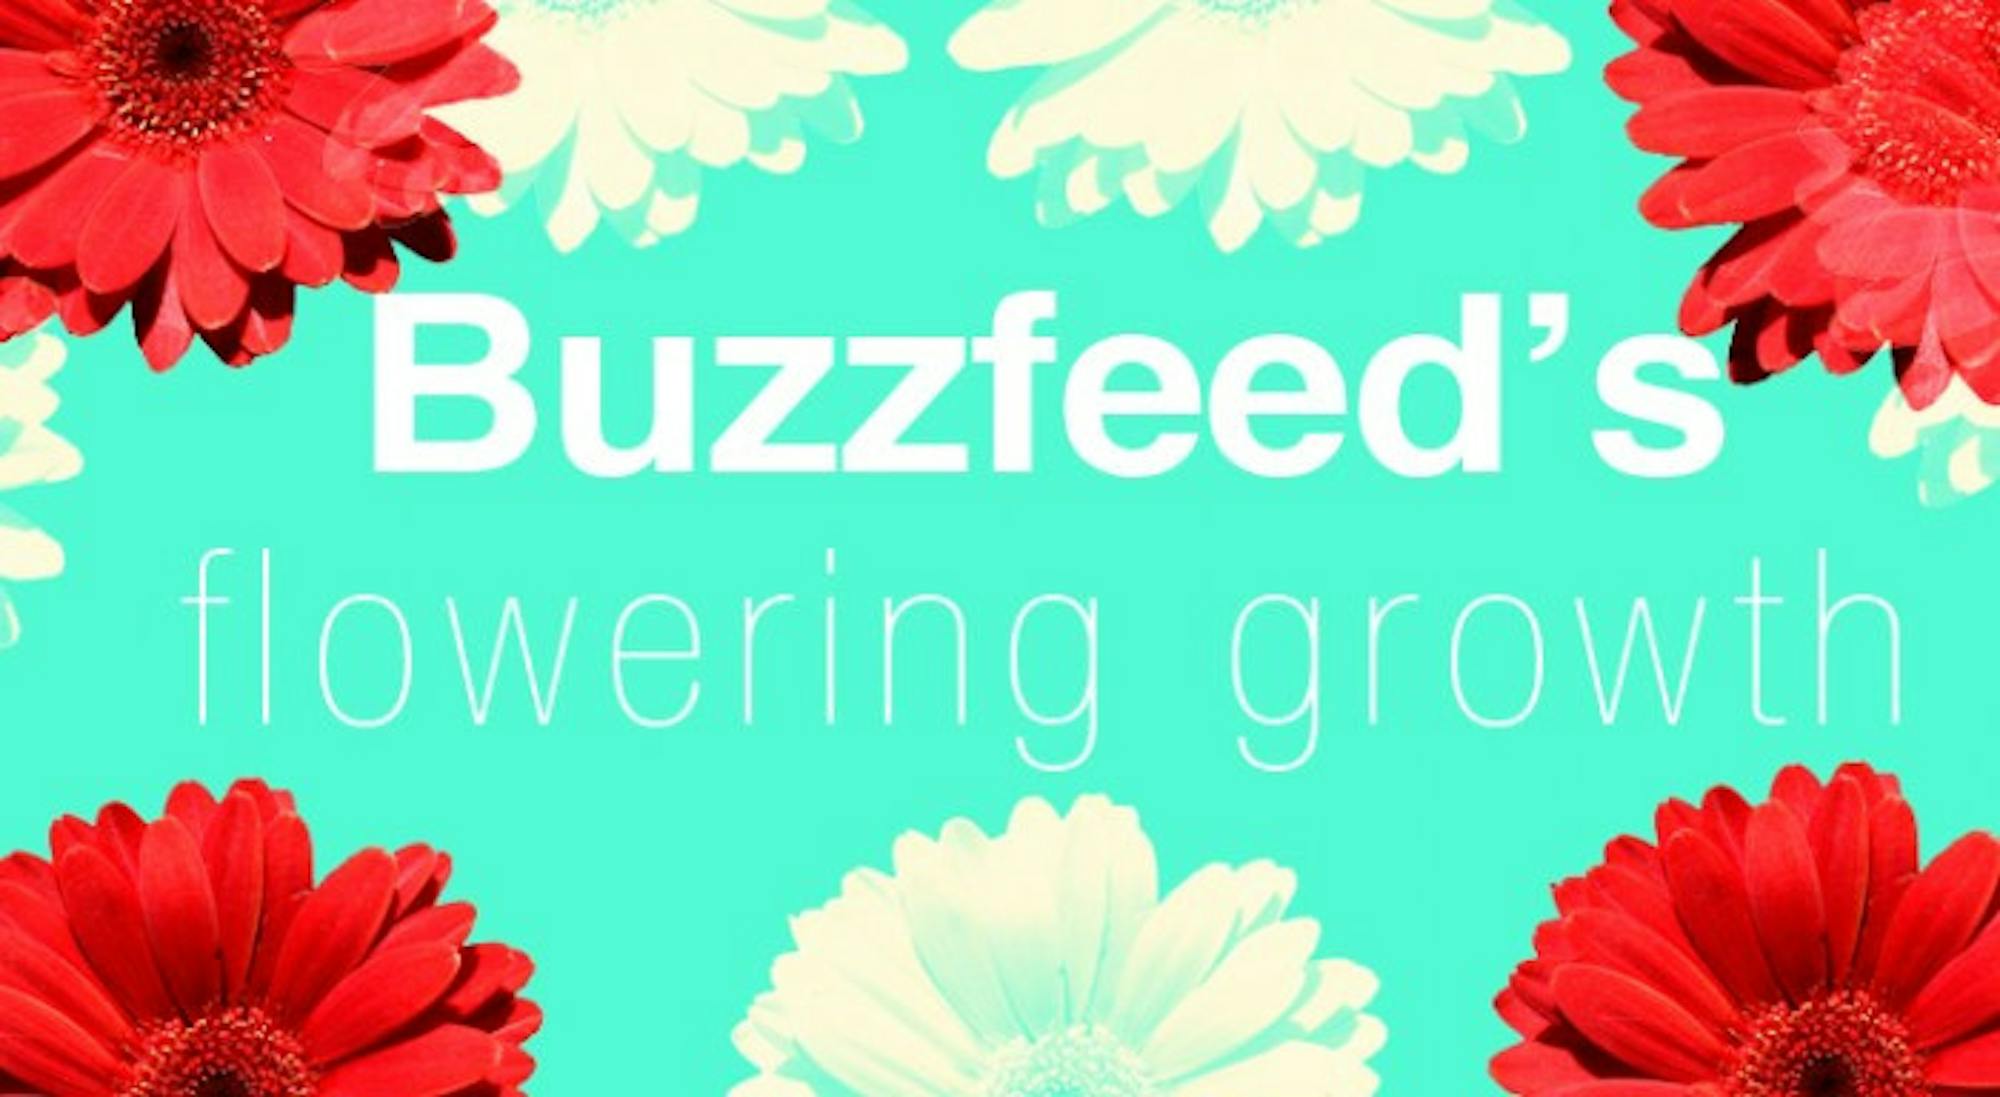 buzzfeed-graphic-WEB